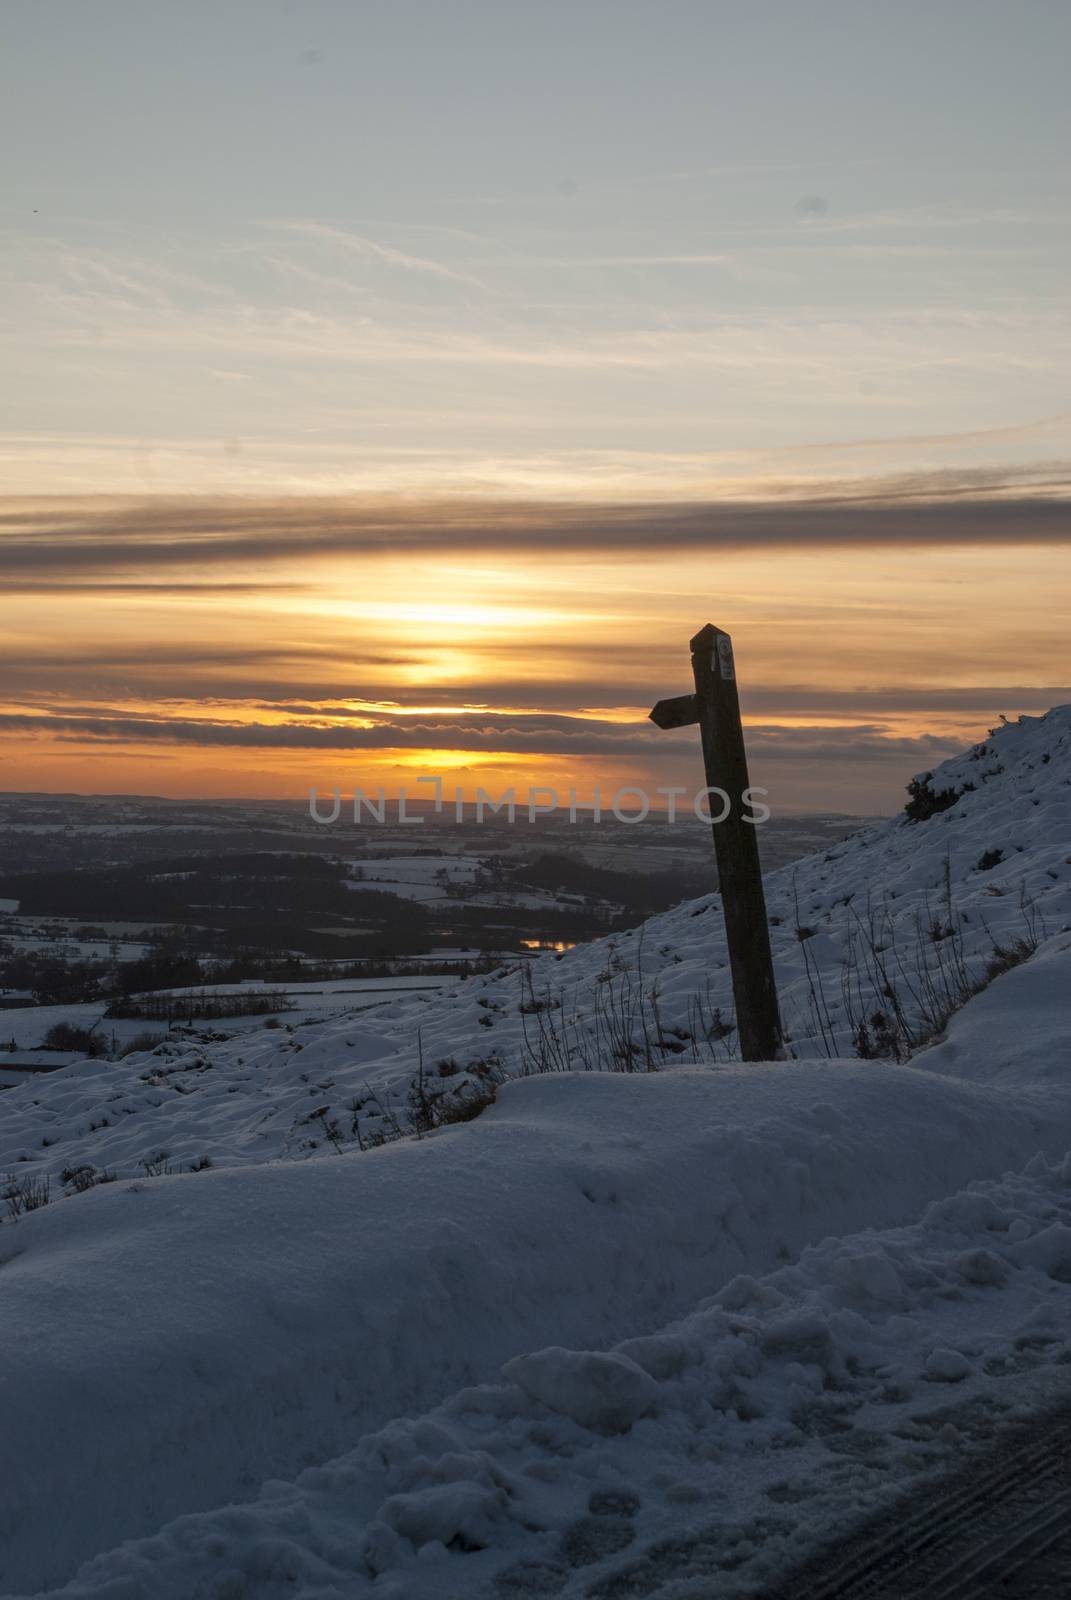 Scenic snowy view from Ramshaw Rocks, Peak District, looking towards Leek, Staffordshire